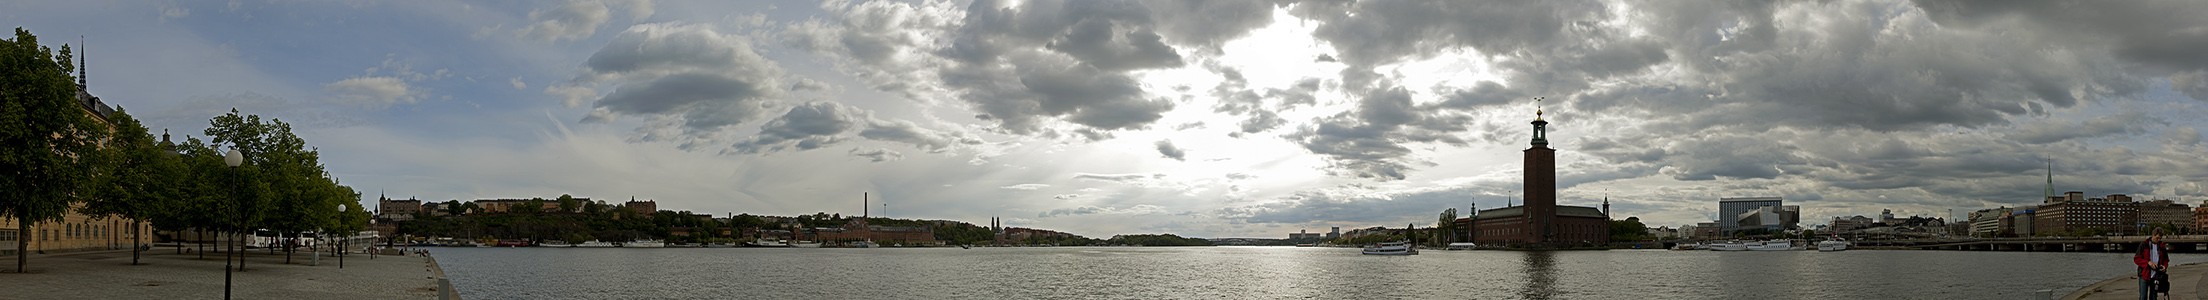 Riddarholmen Stockholm